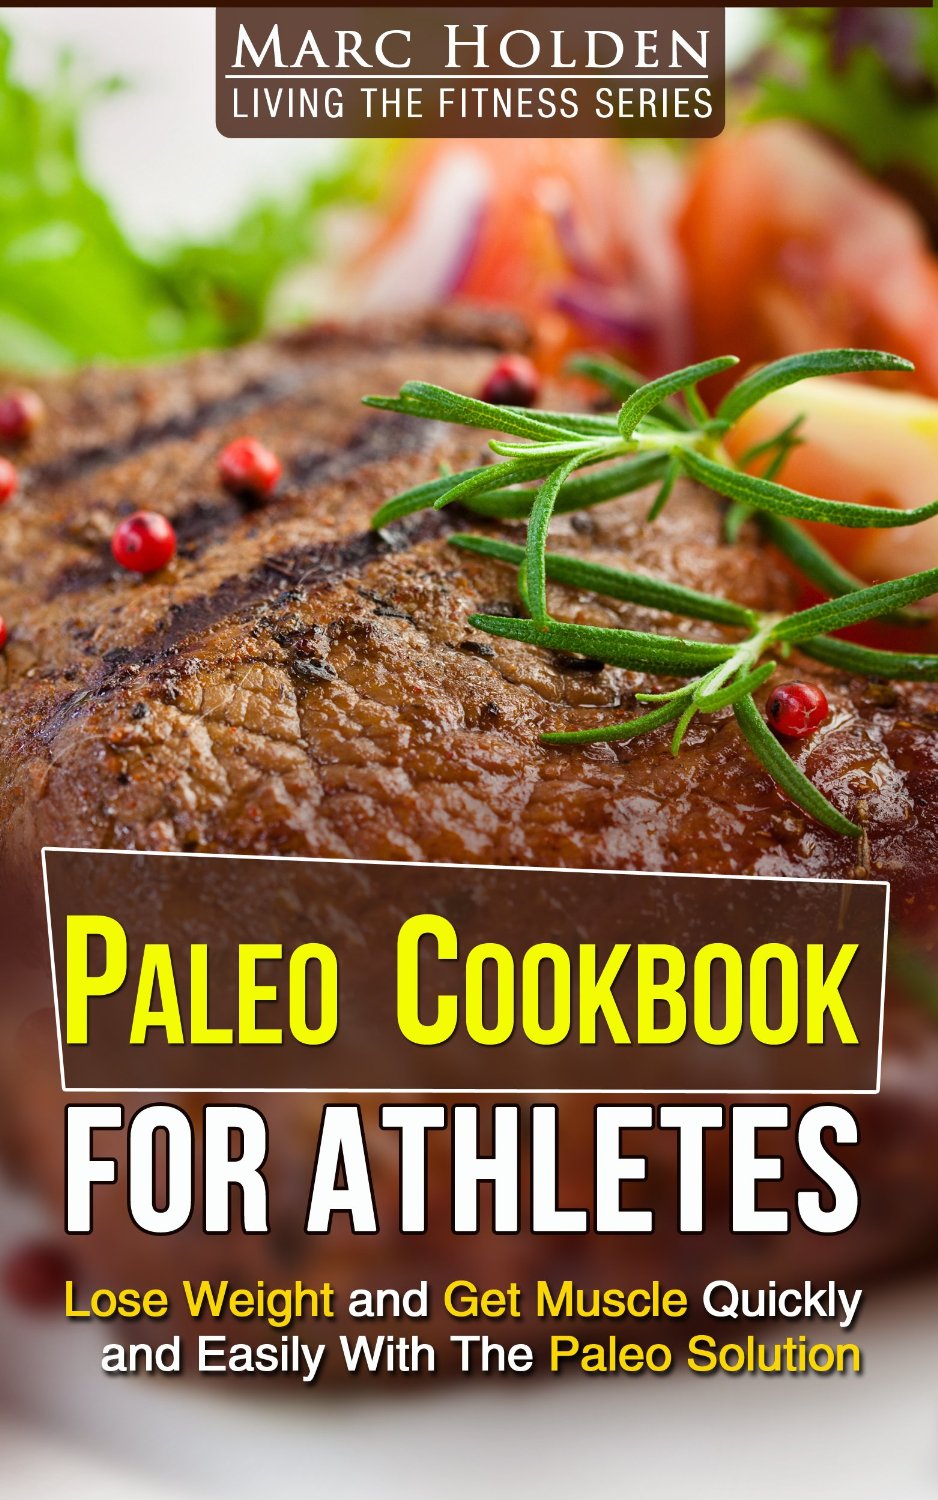 Paleo Cookbook for Athletes by Marc Holden